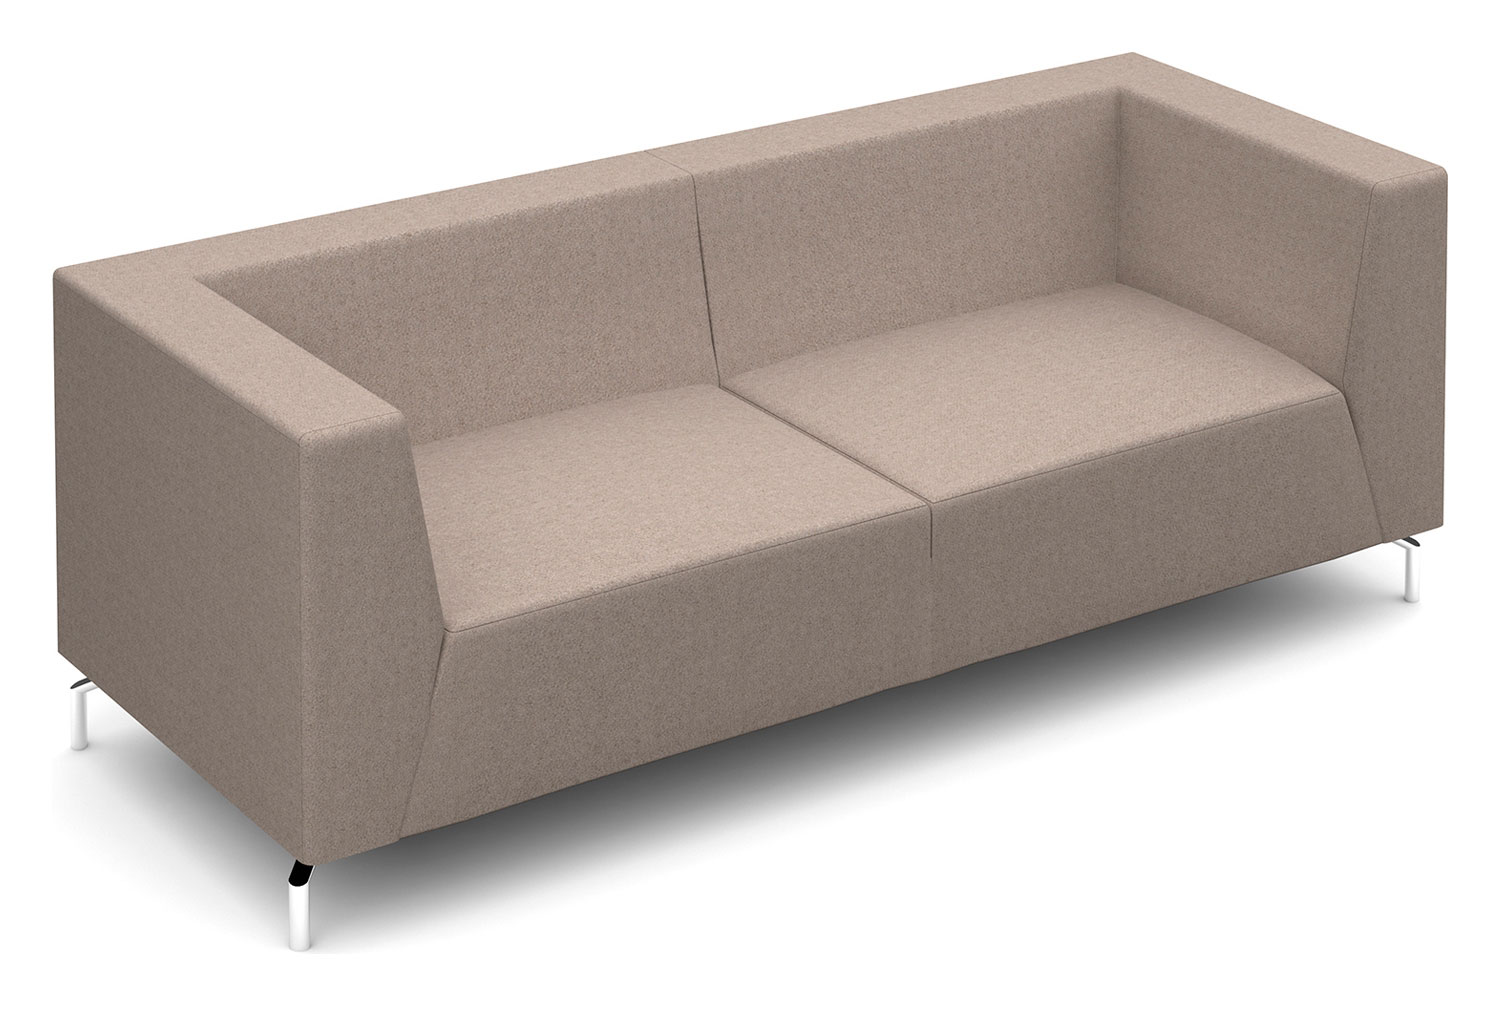 Plato Fabric Low Three Seater Sofa, Maturity